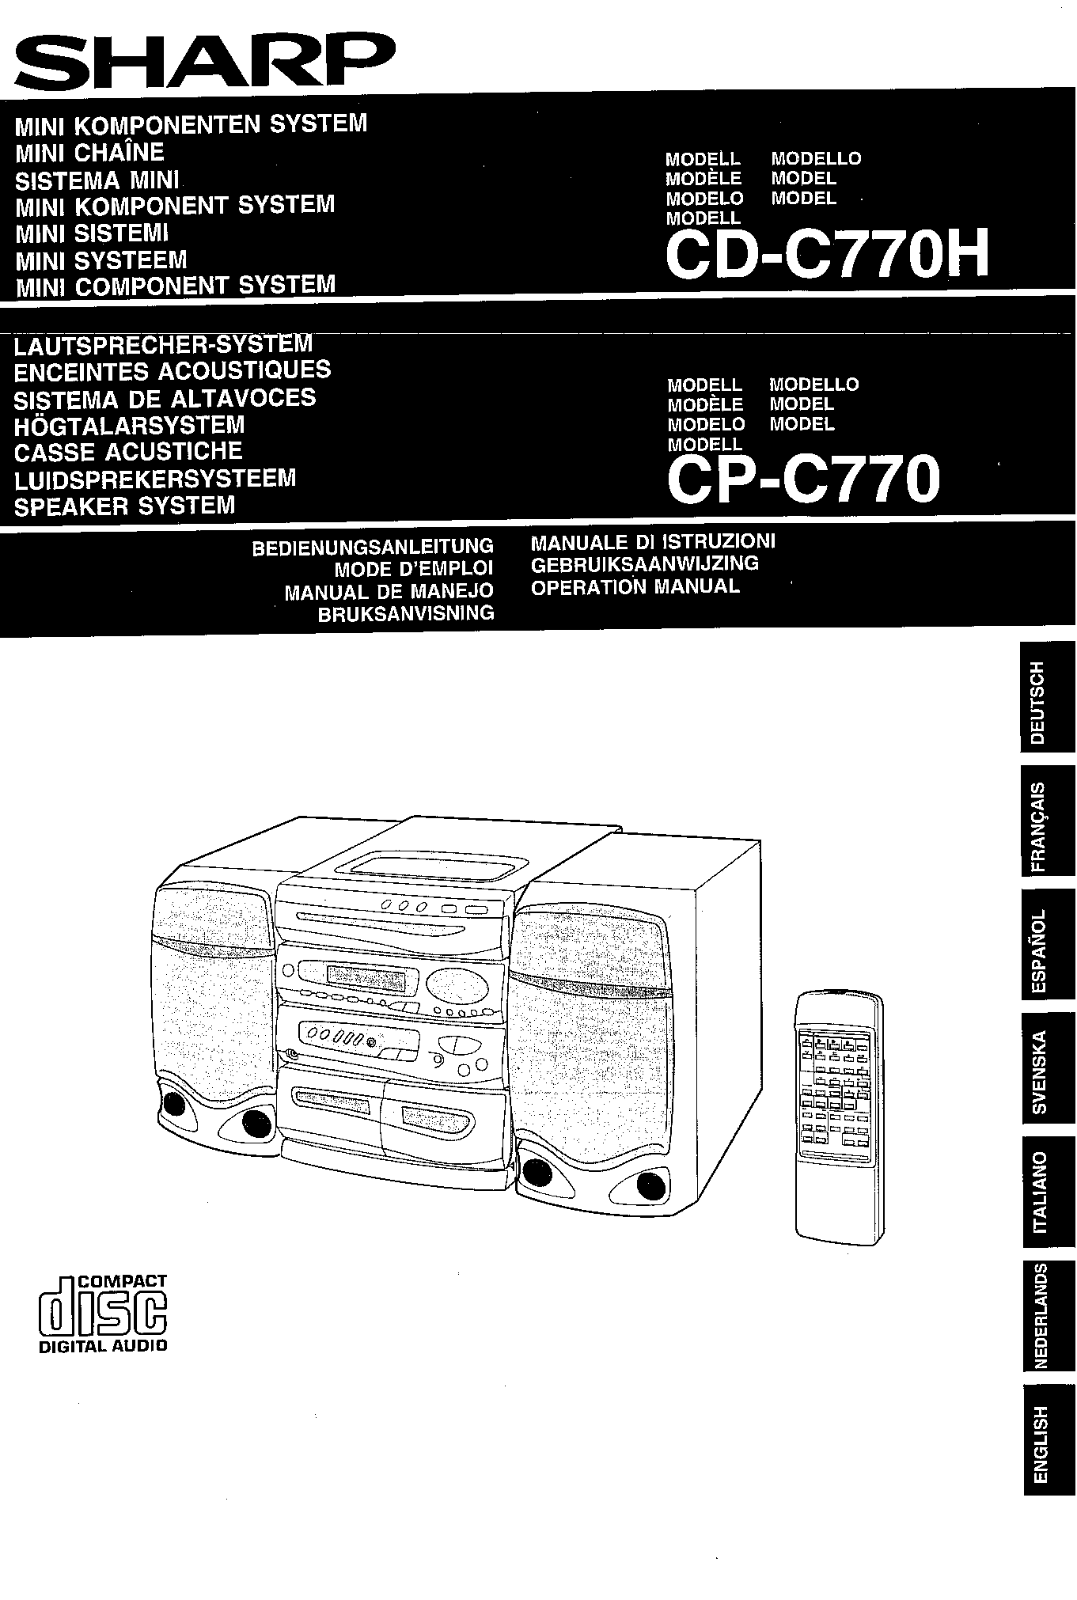 Sharp CP-C770, CD-C770H Manual